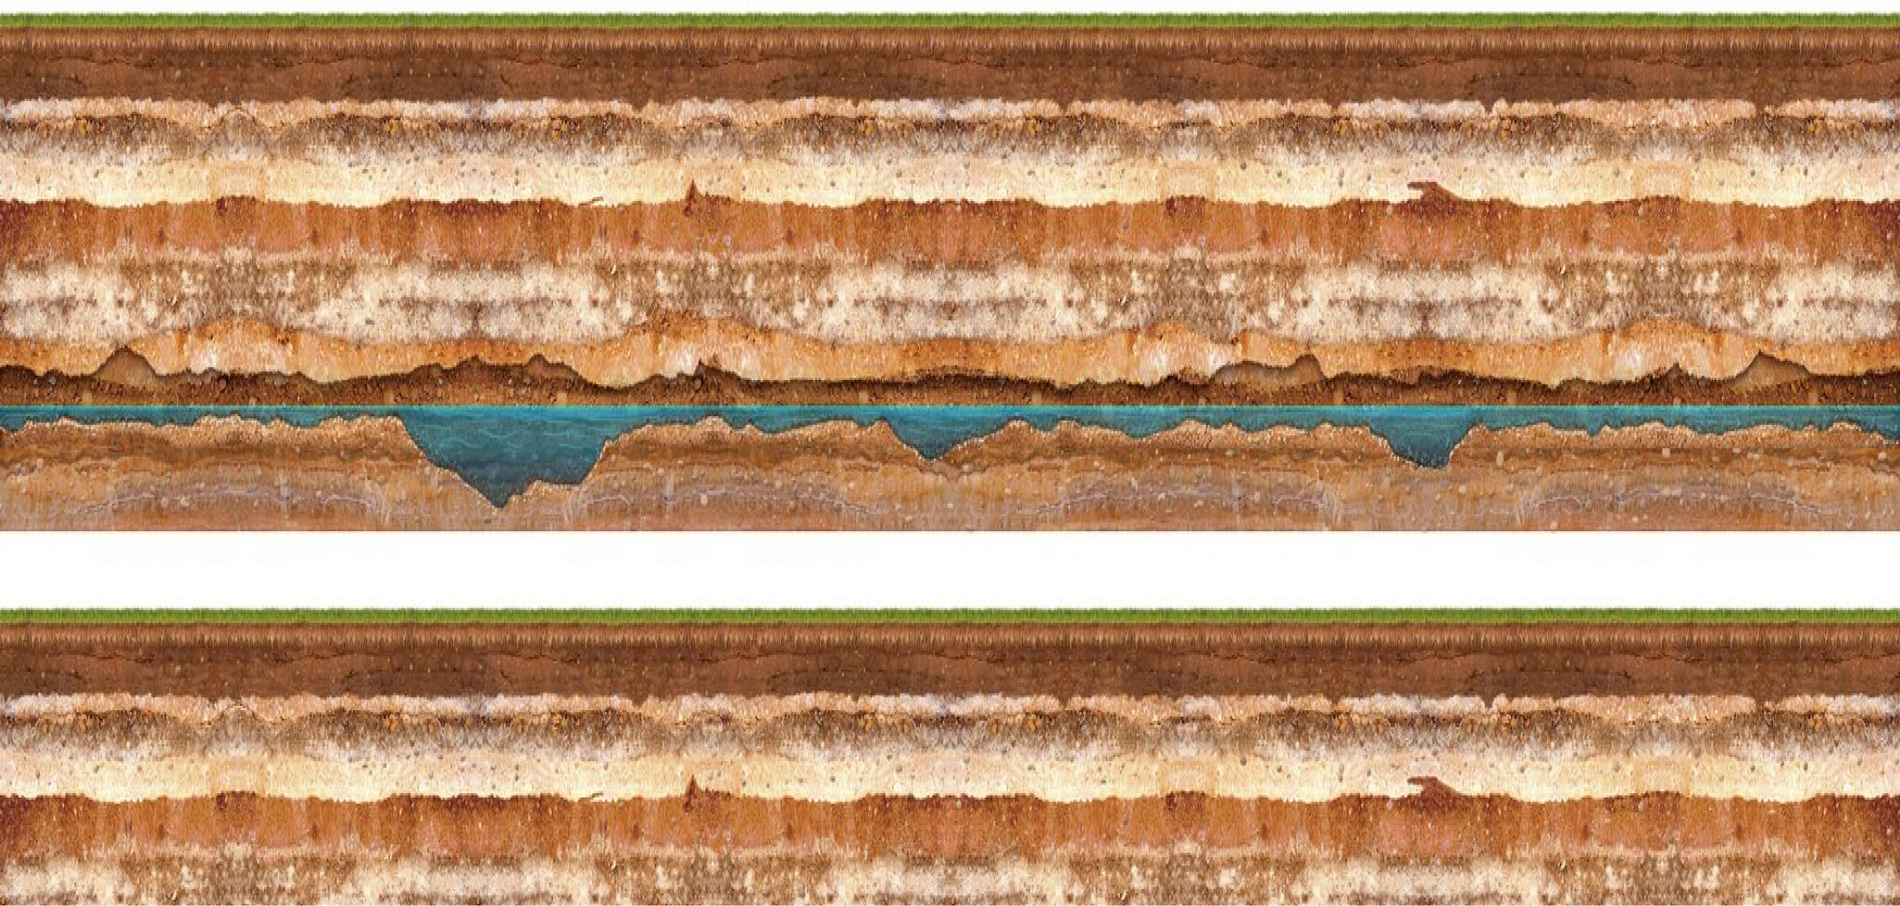 Image of underground layers